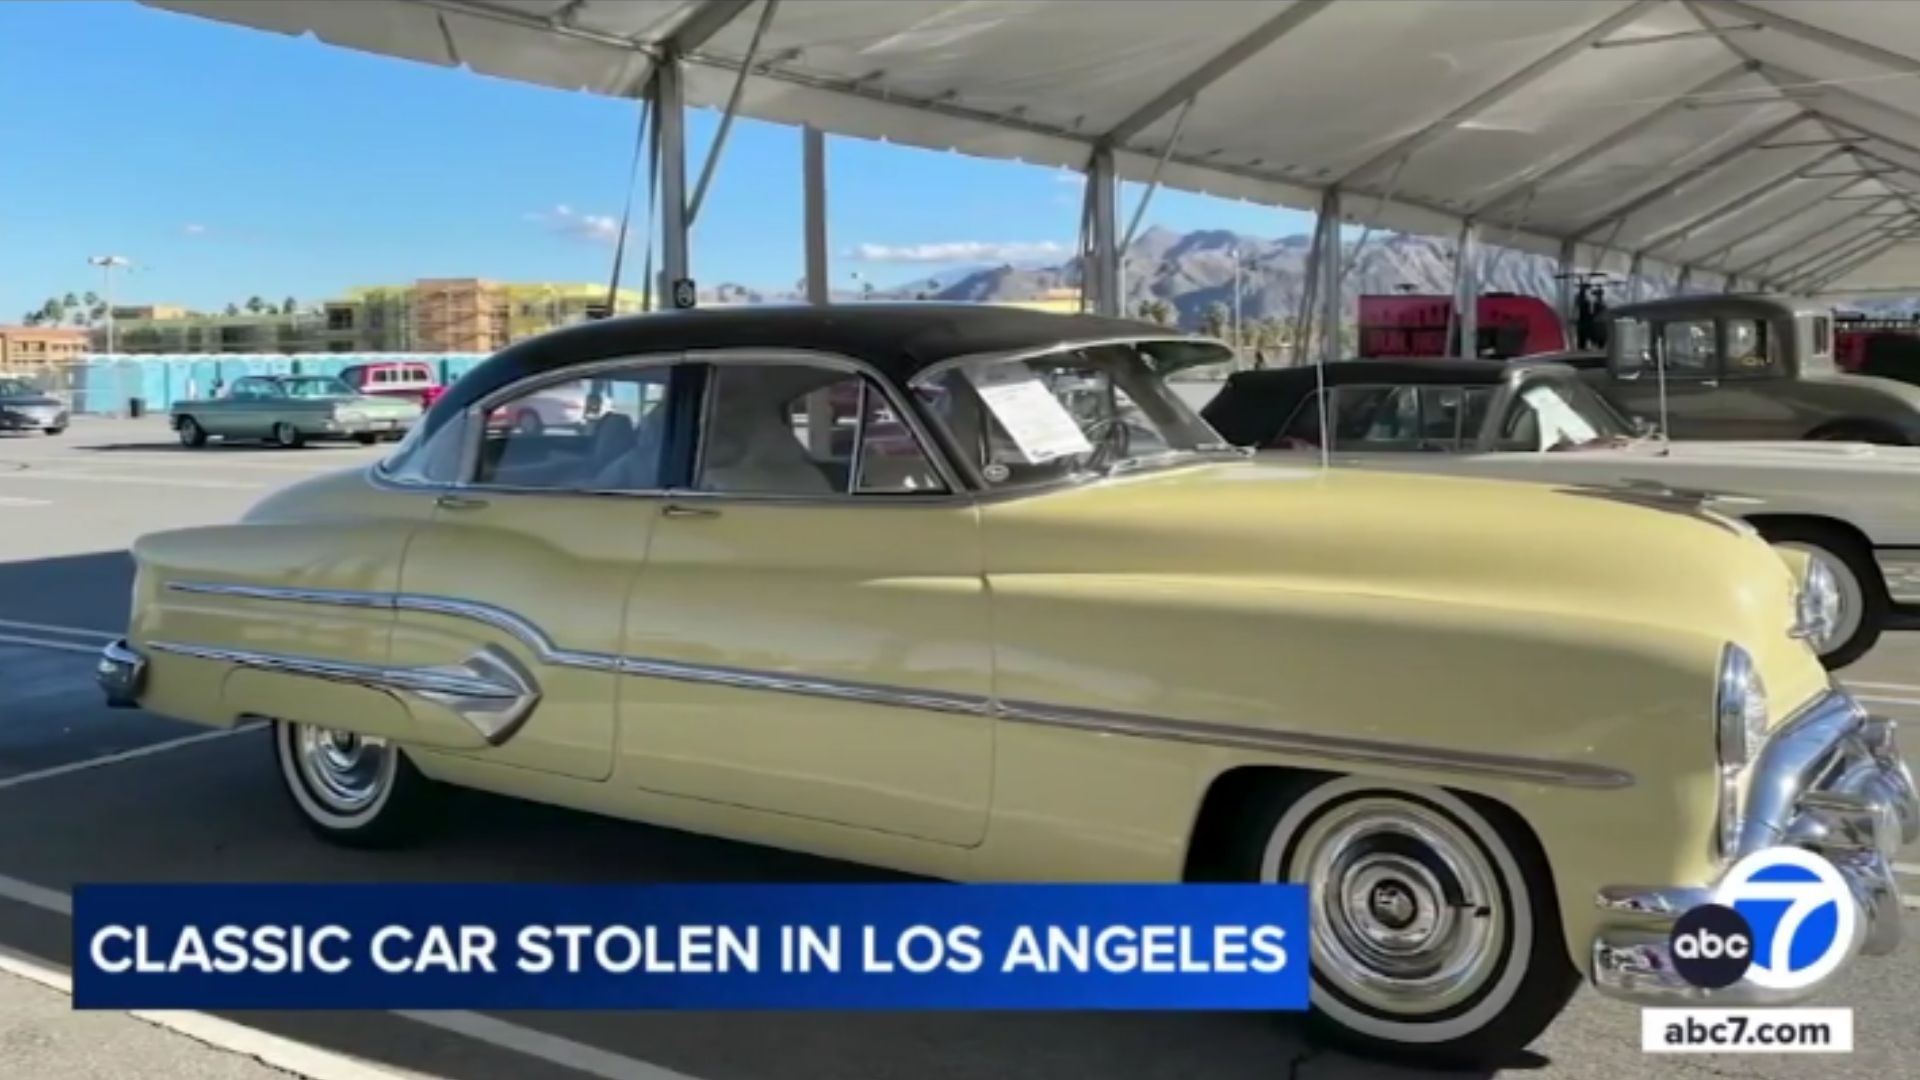 Classic Oldsmobile Stolen From Underground Los Angeles Garage